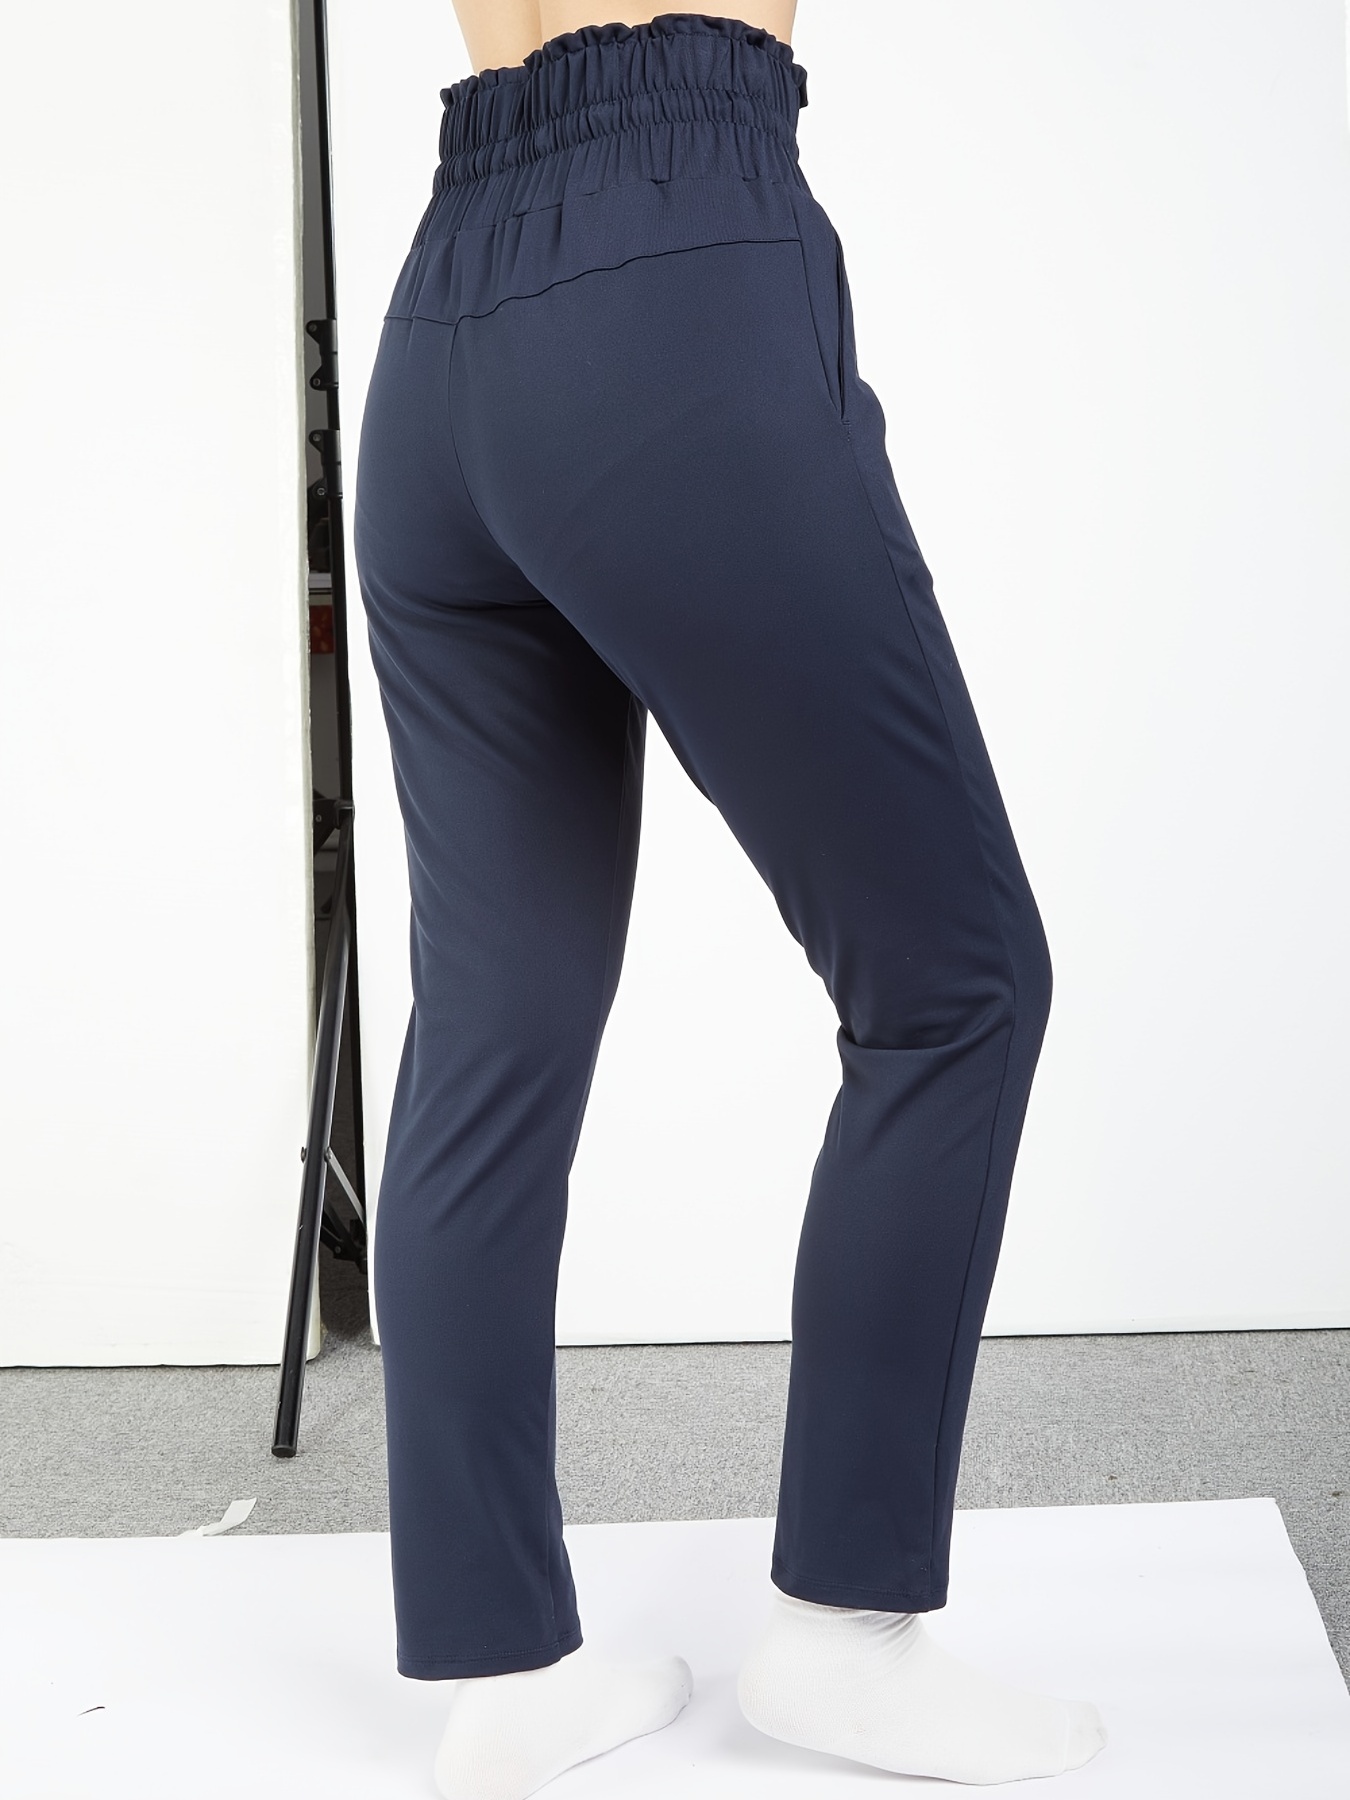 Women's Workout Pants Black Grey High Waist Sweatpants Sports